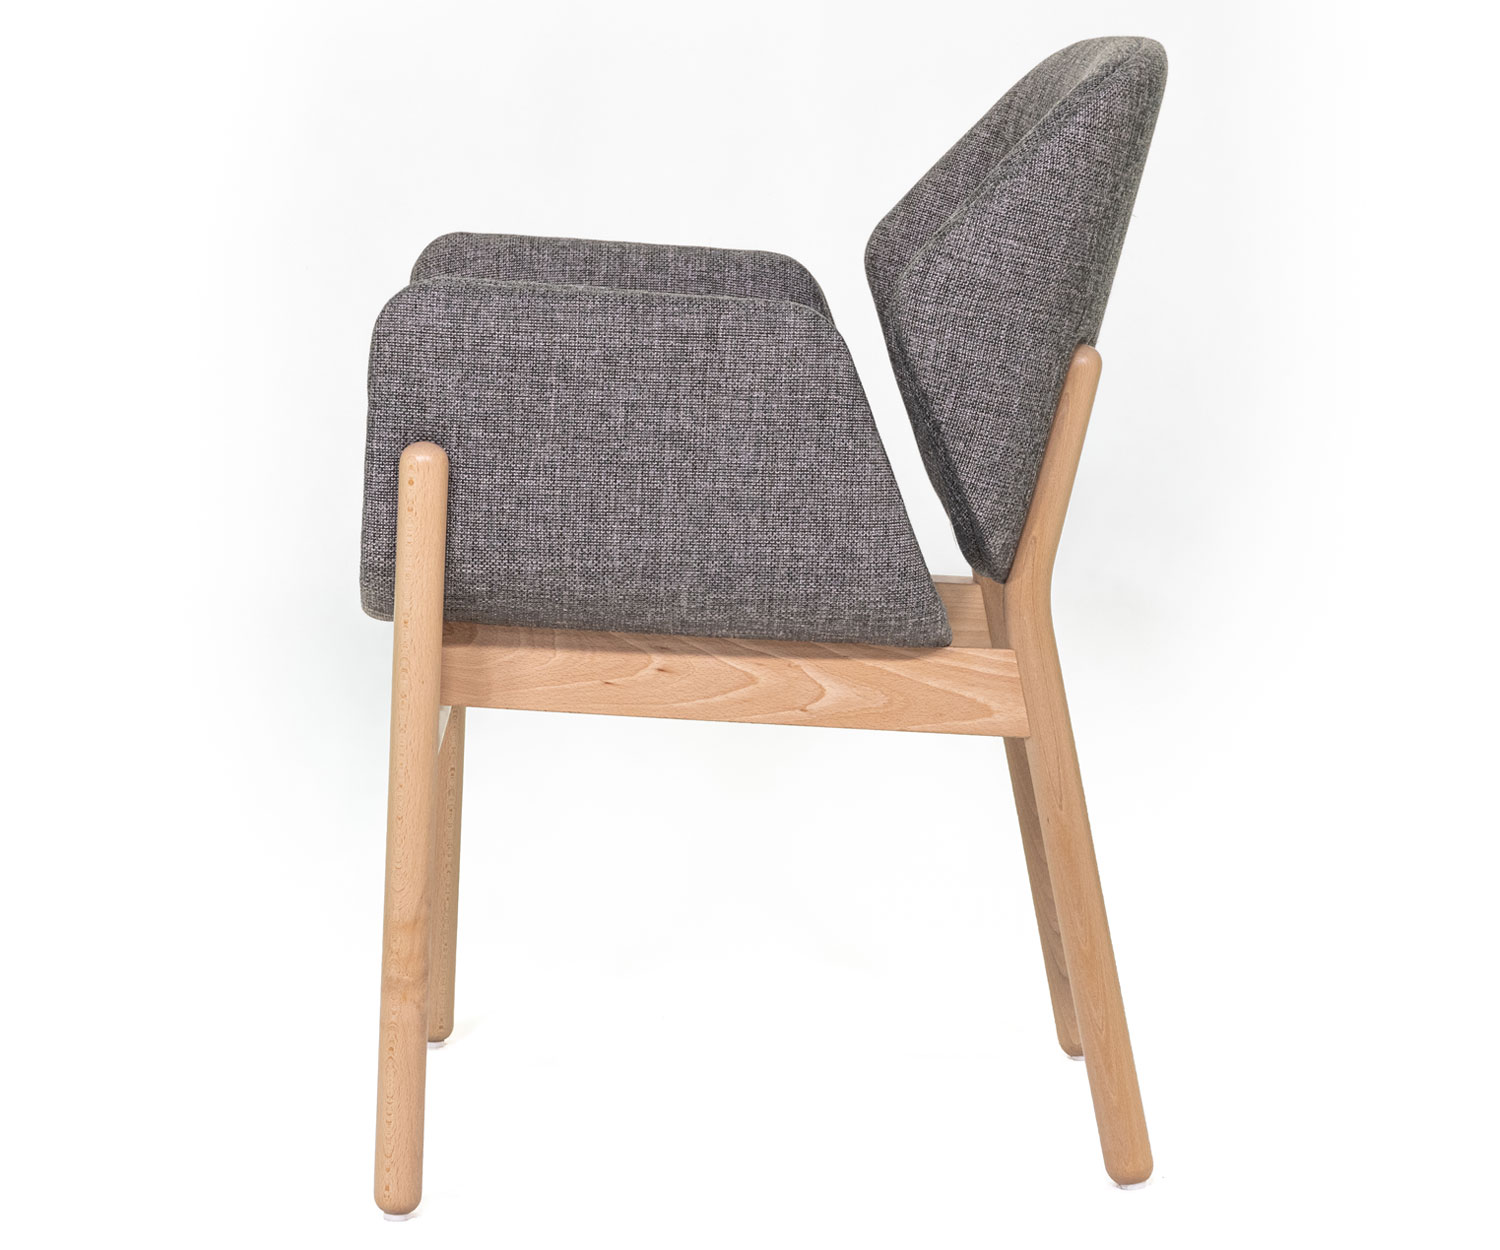 Adele Armchair by FHG, Australian Furniture Manufacturer